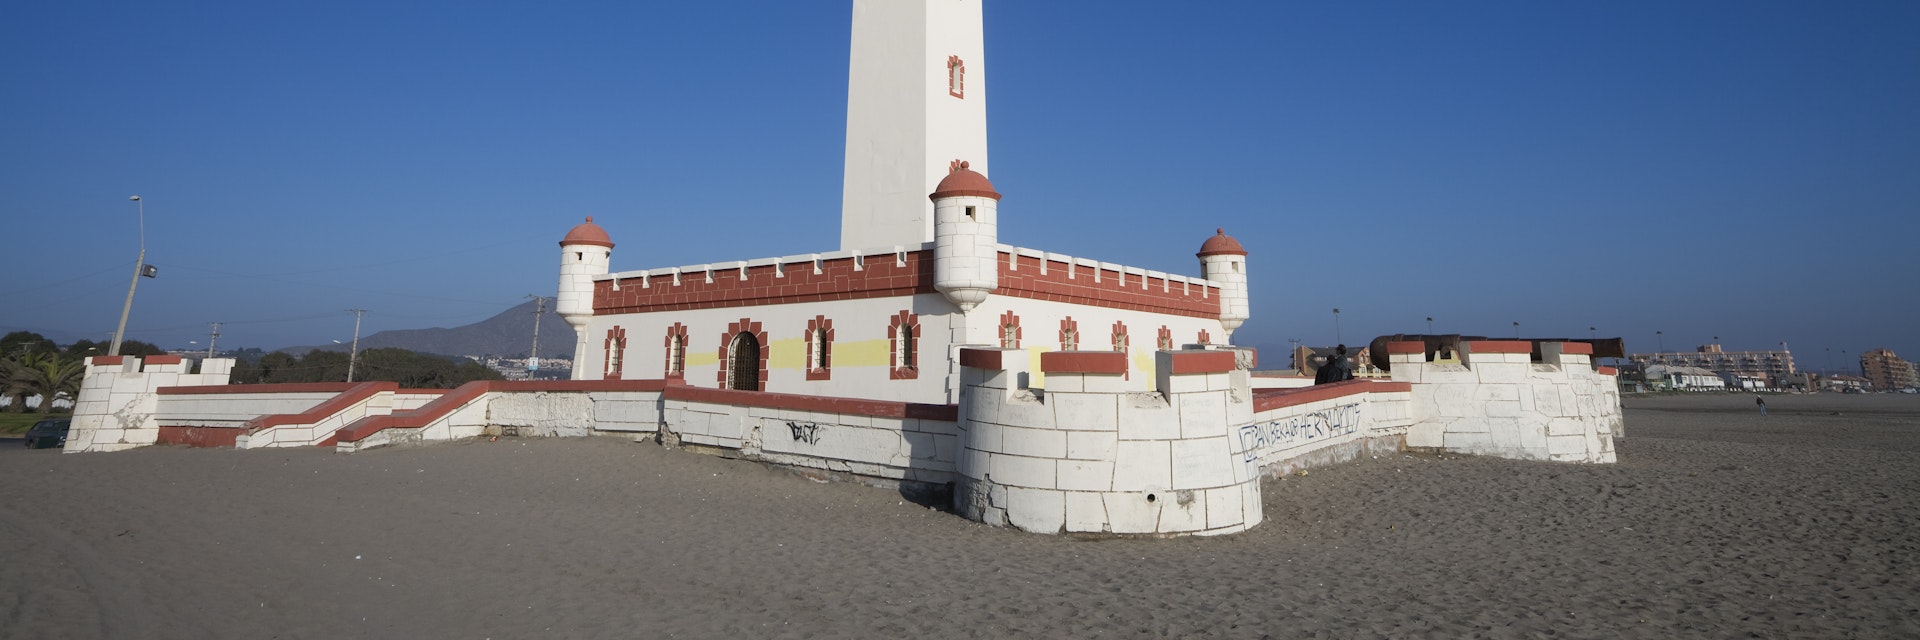 La serena lighthouse